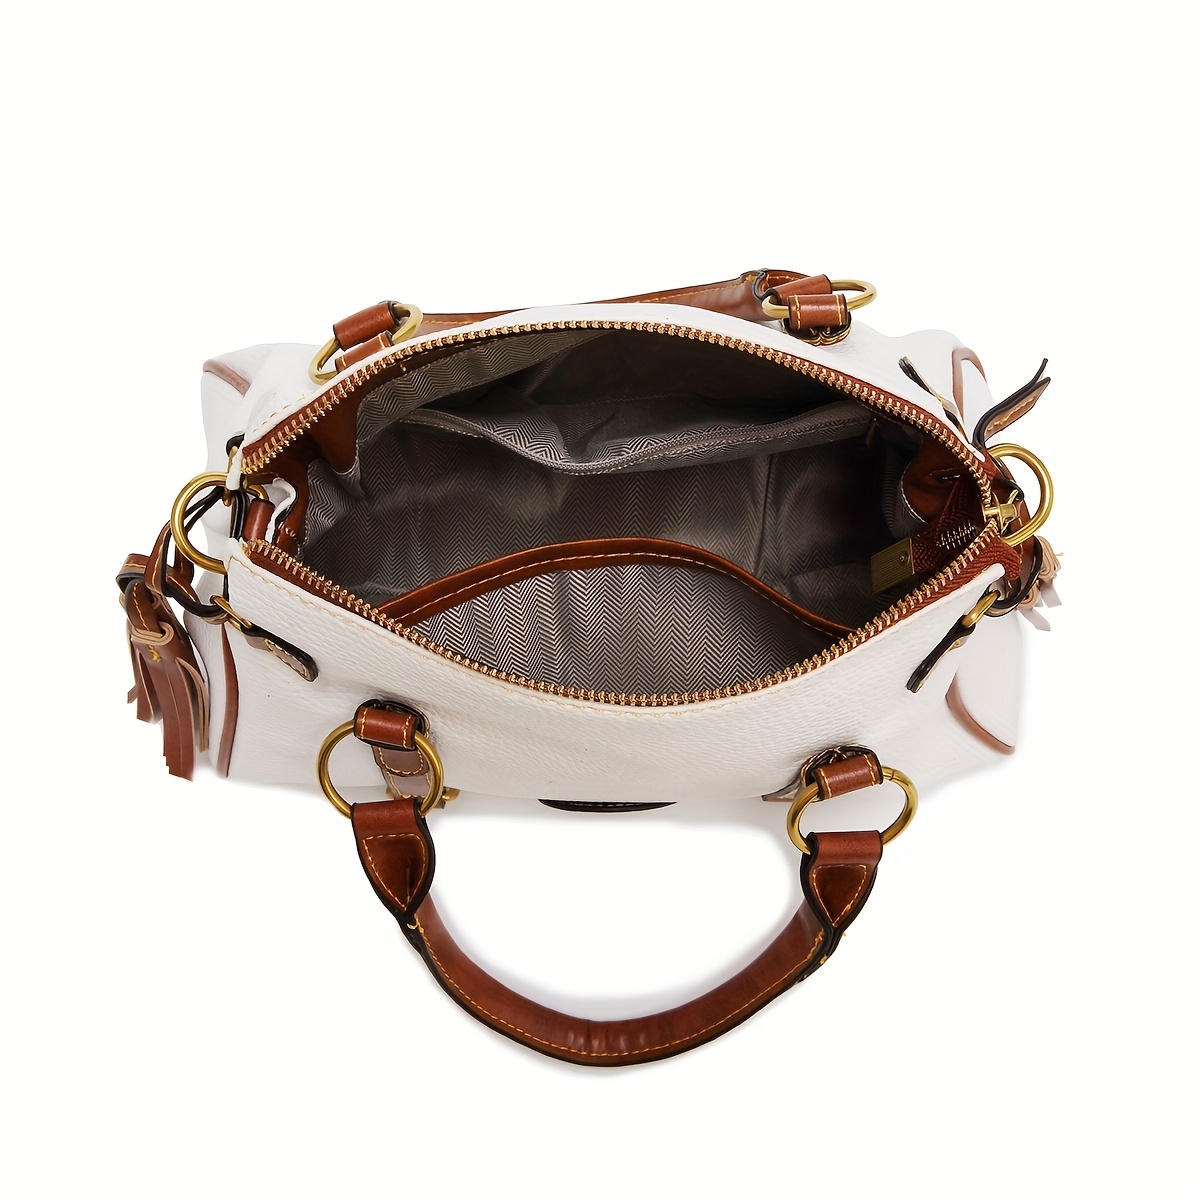 Retro Tote Bag Boston PU Leather Top-handle Bags Women Travel